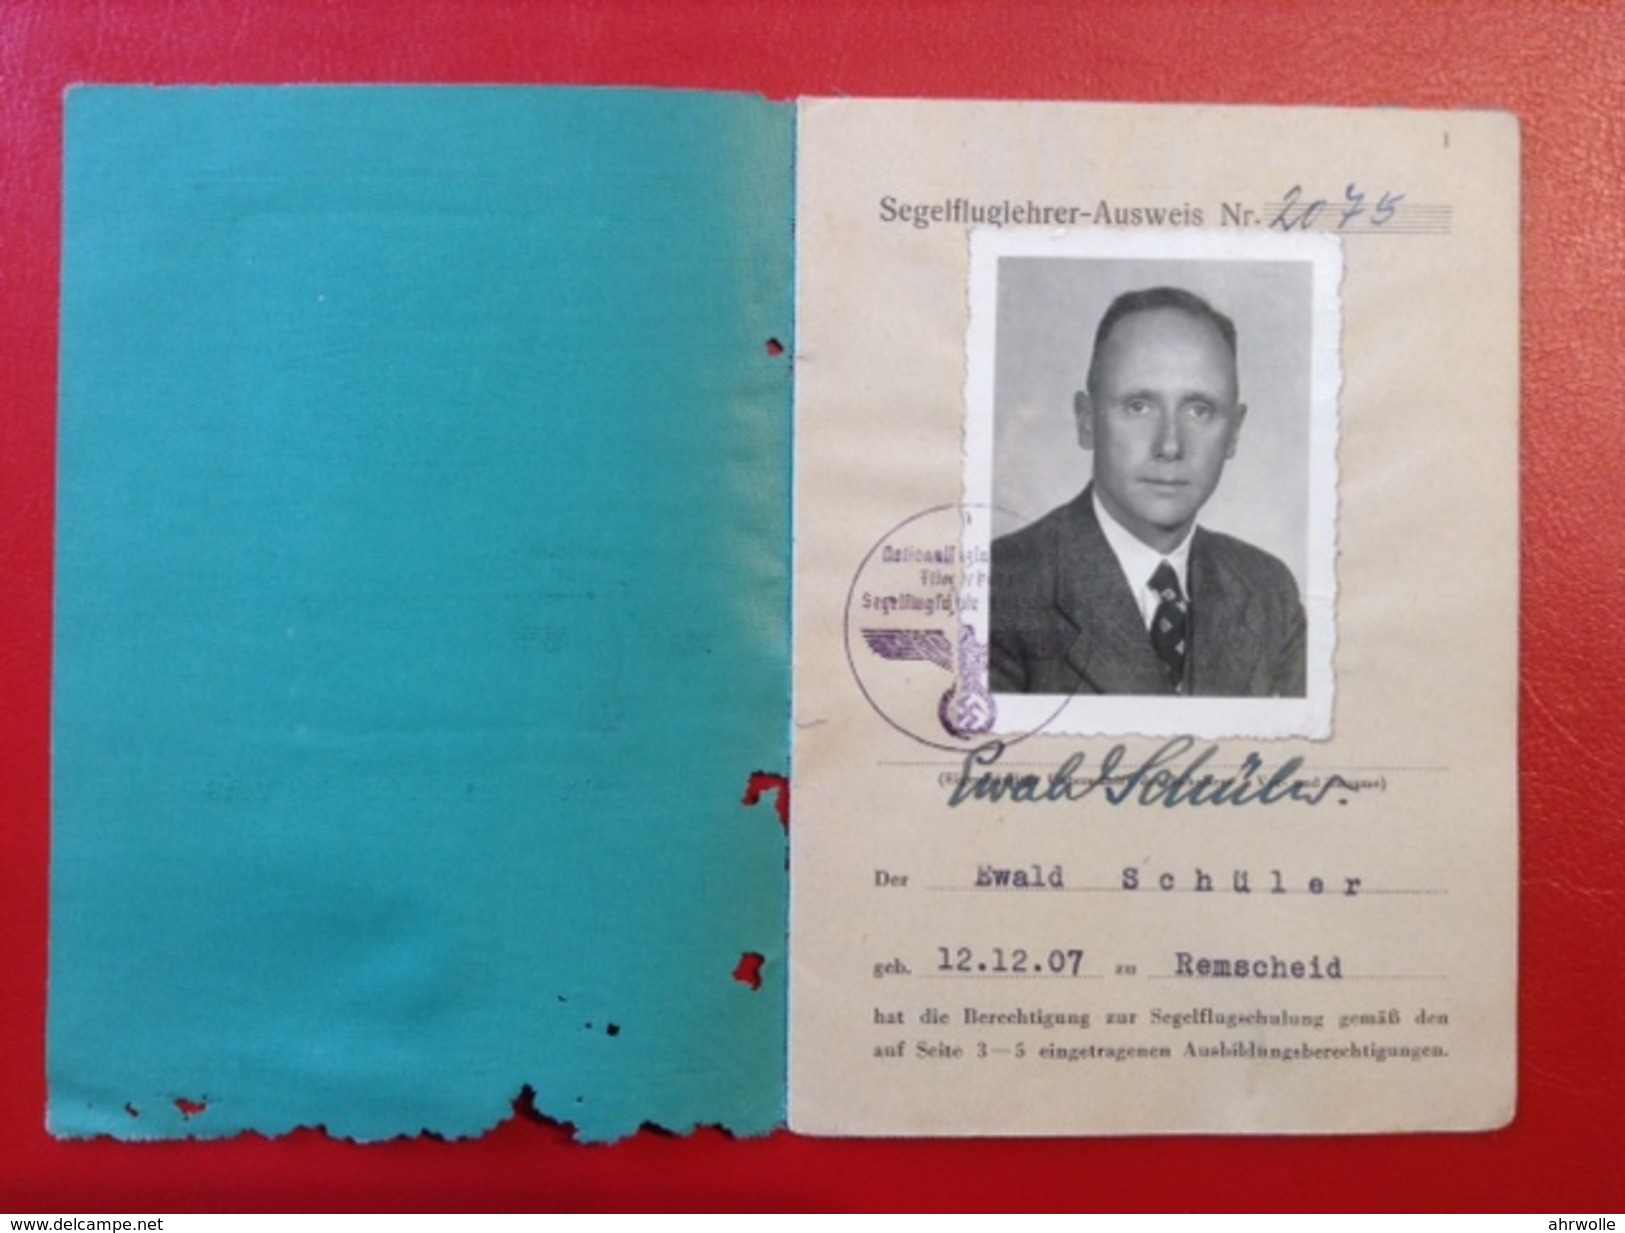 NSFK Segelfluglehrer-Ausweis WW2 Remscheid 1944 Segelflugschule Ballenstedt - Dokumente